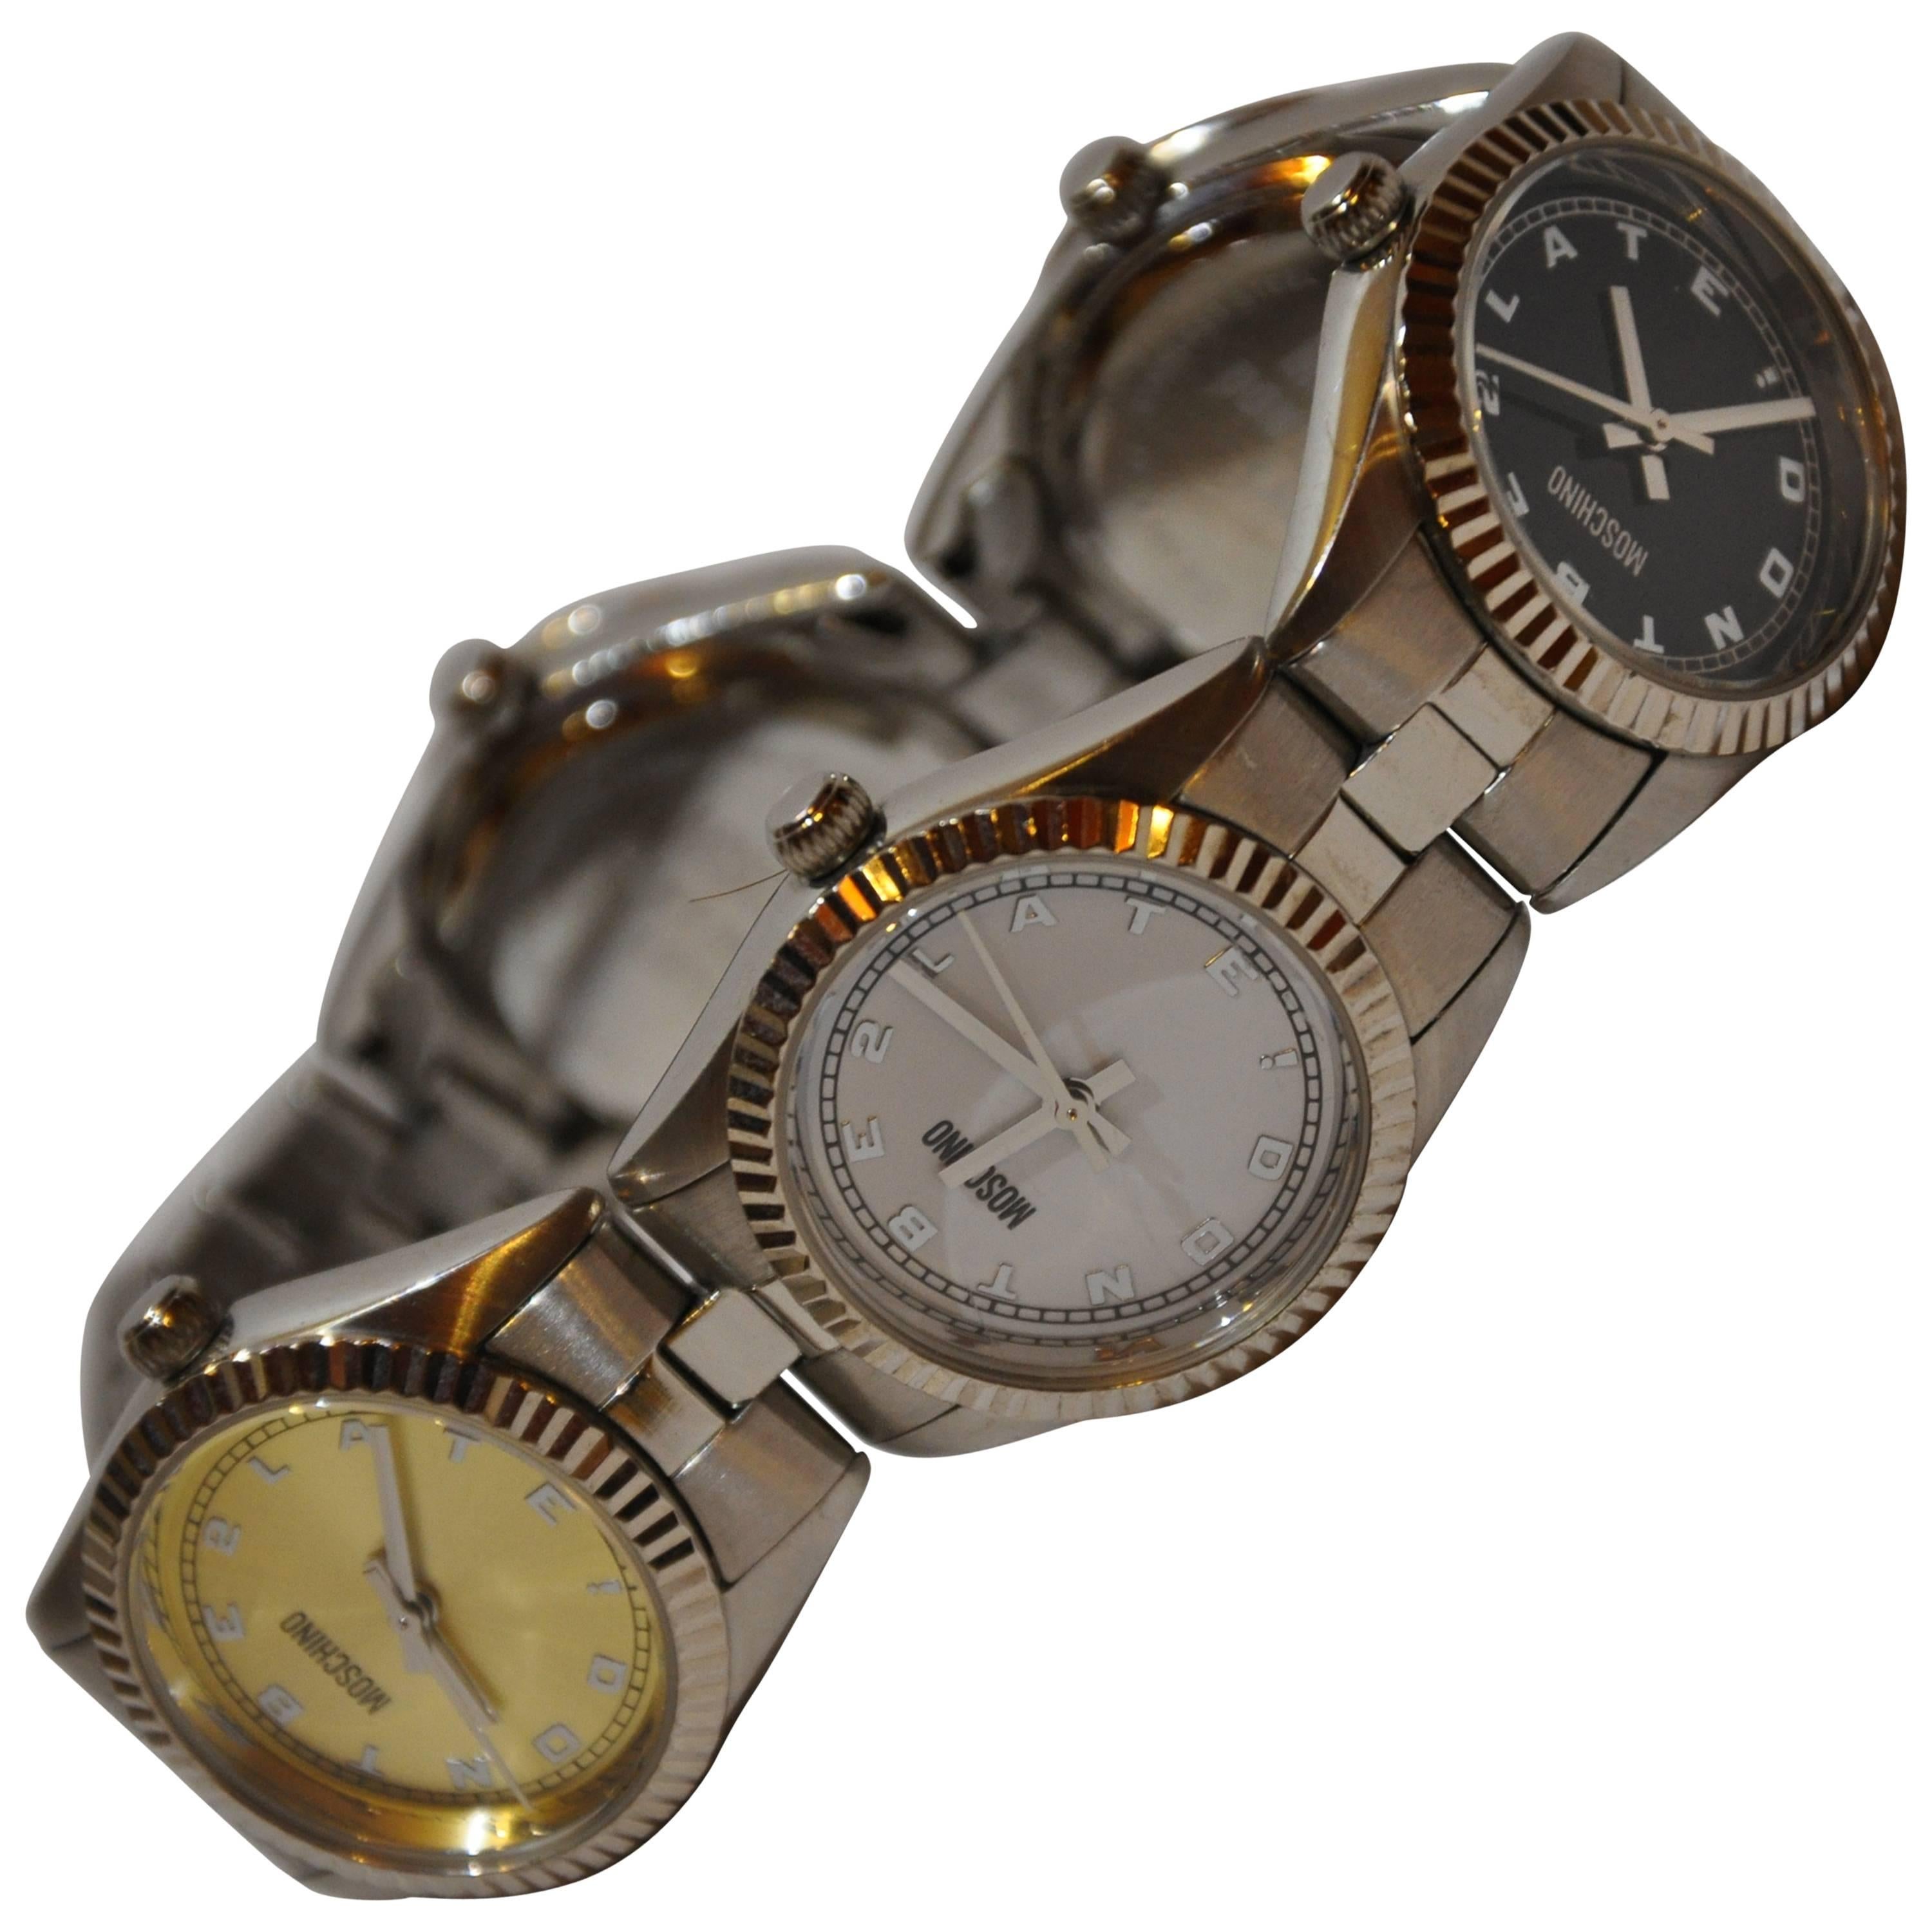 Часы Multi watches. Наручные часы Moschino 7751 120 545 кварцевые. Наручные часы Moschino 7751 120 545 кварцевые батарейка. Наручные часы Moschino mw0348. Dont watch